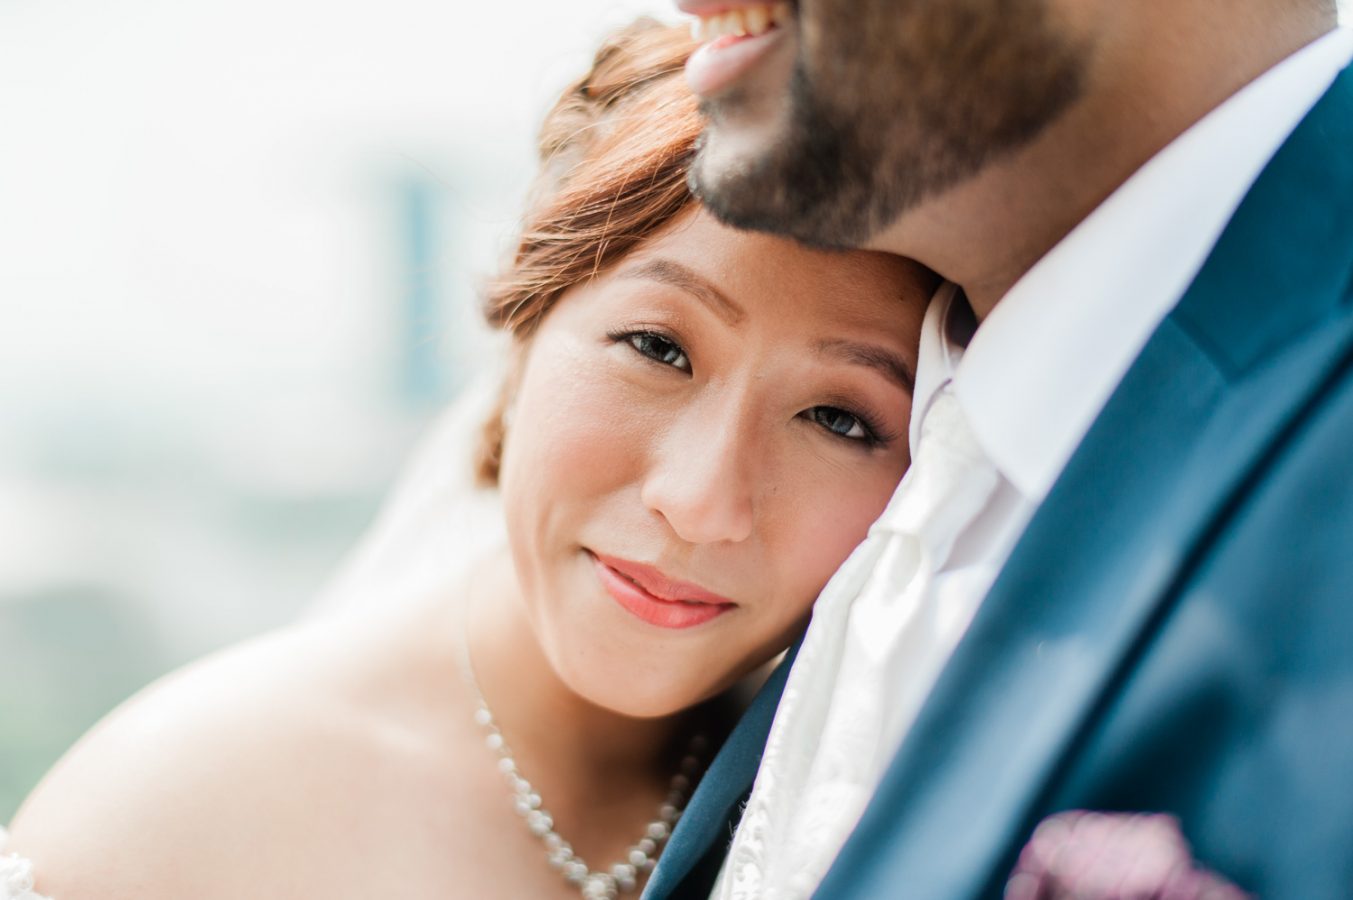 singapore-multi-cultural-wedding-mixed-couple-marriage-peninsular-hotel-indian-muslim-chinese